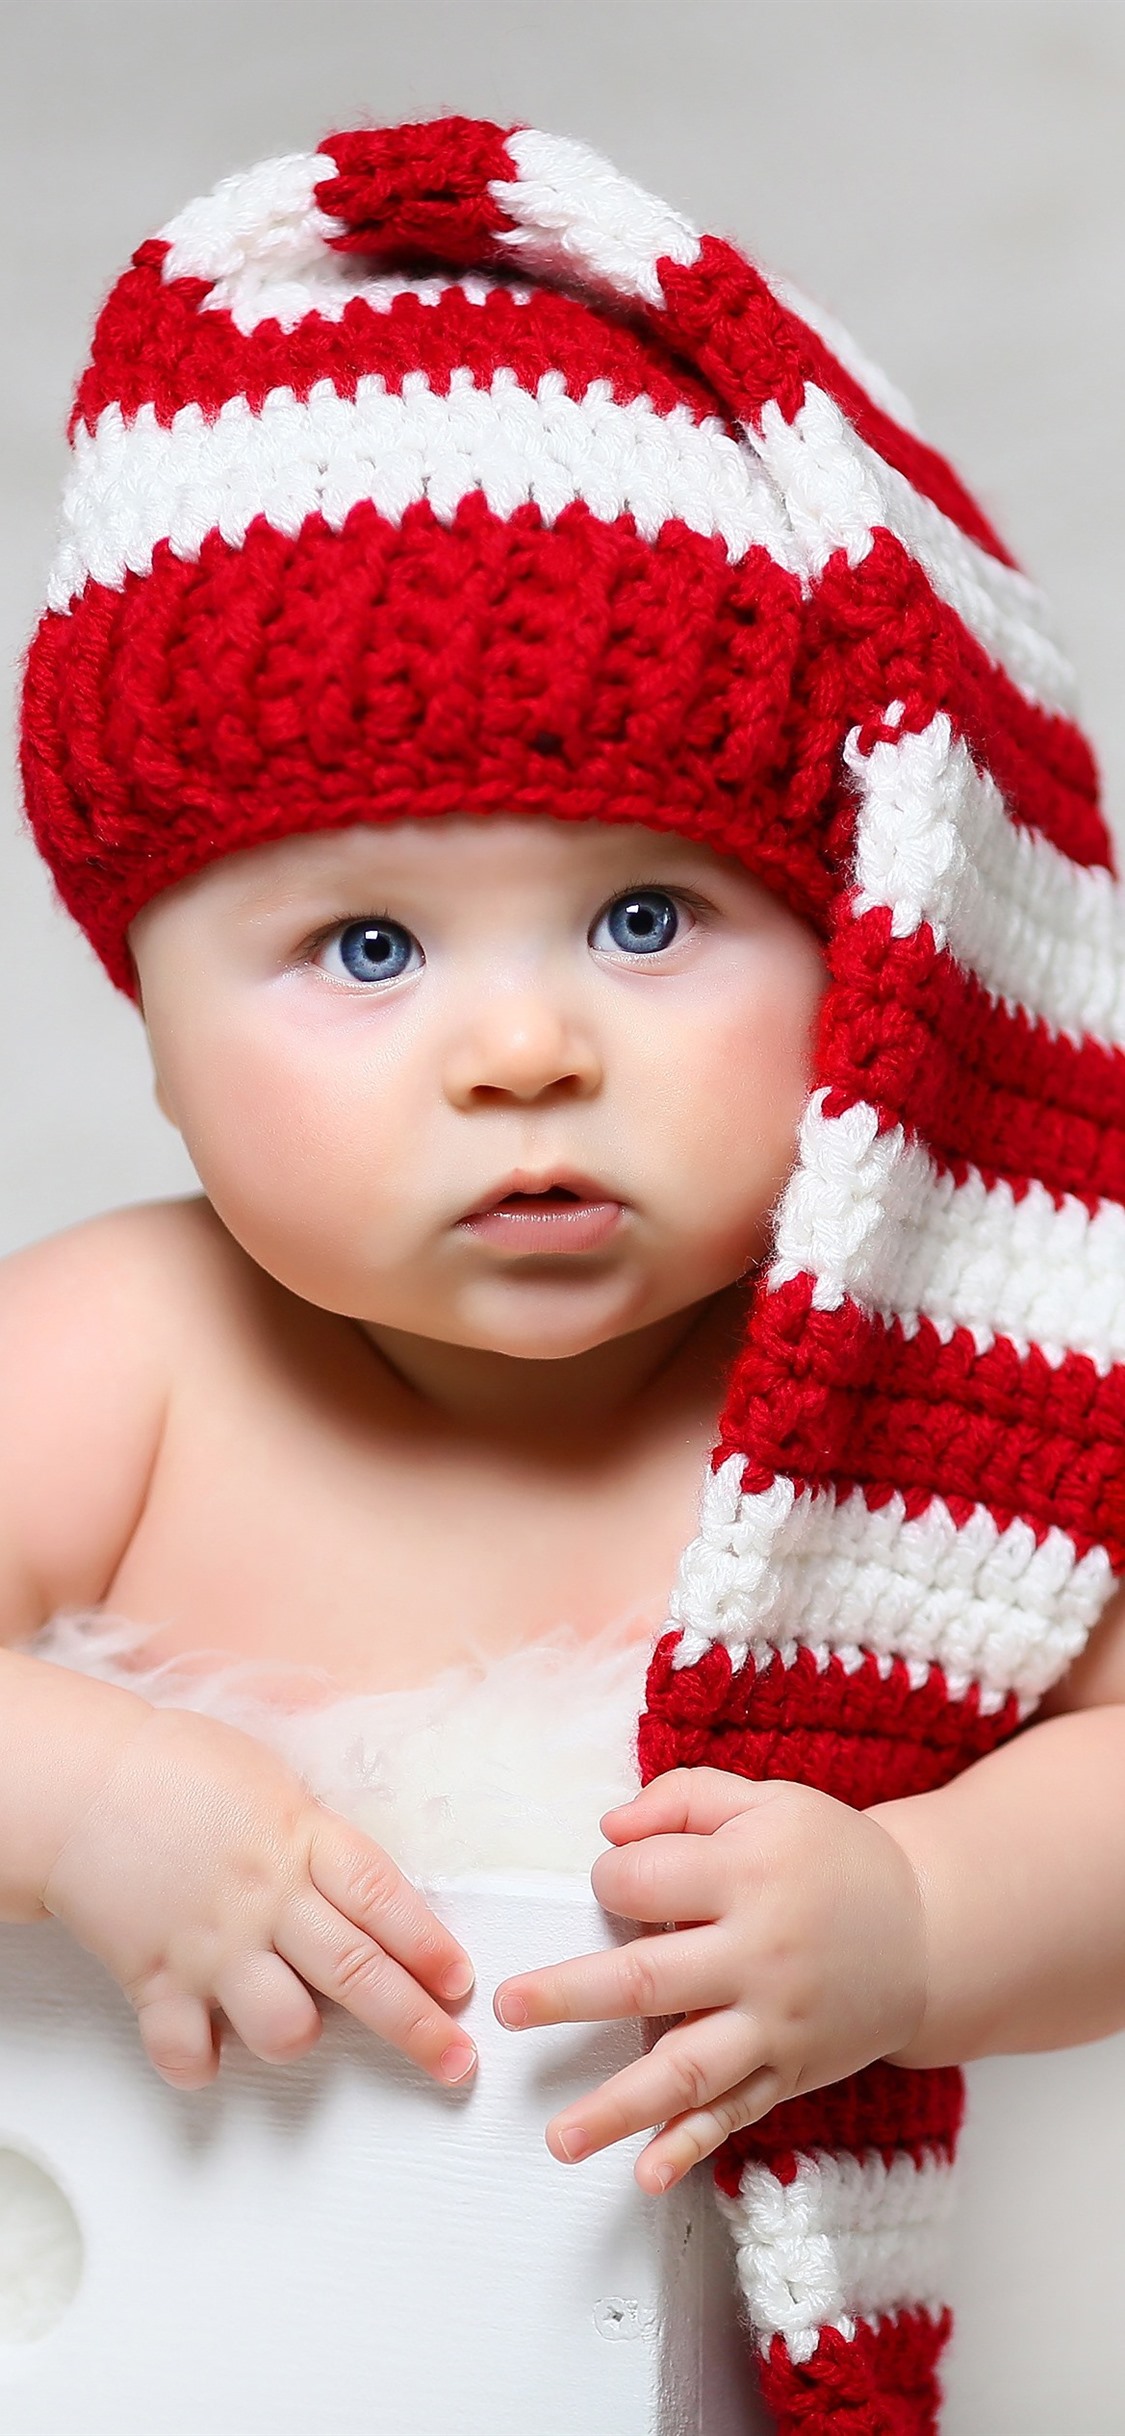 cute baby wallpaper,child,knit cap,clothing,baby,crochet